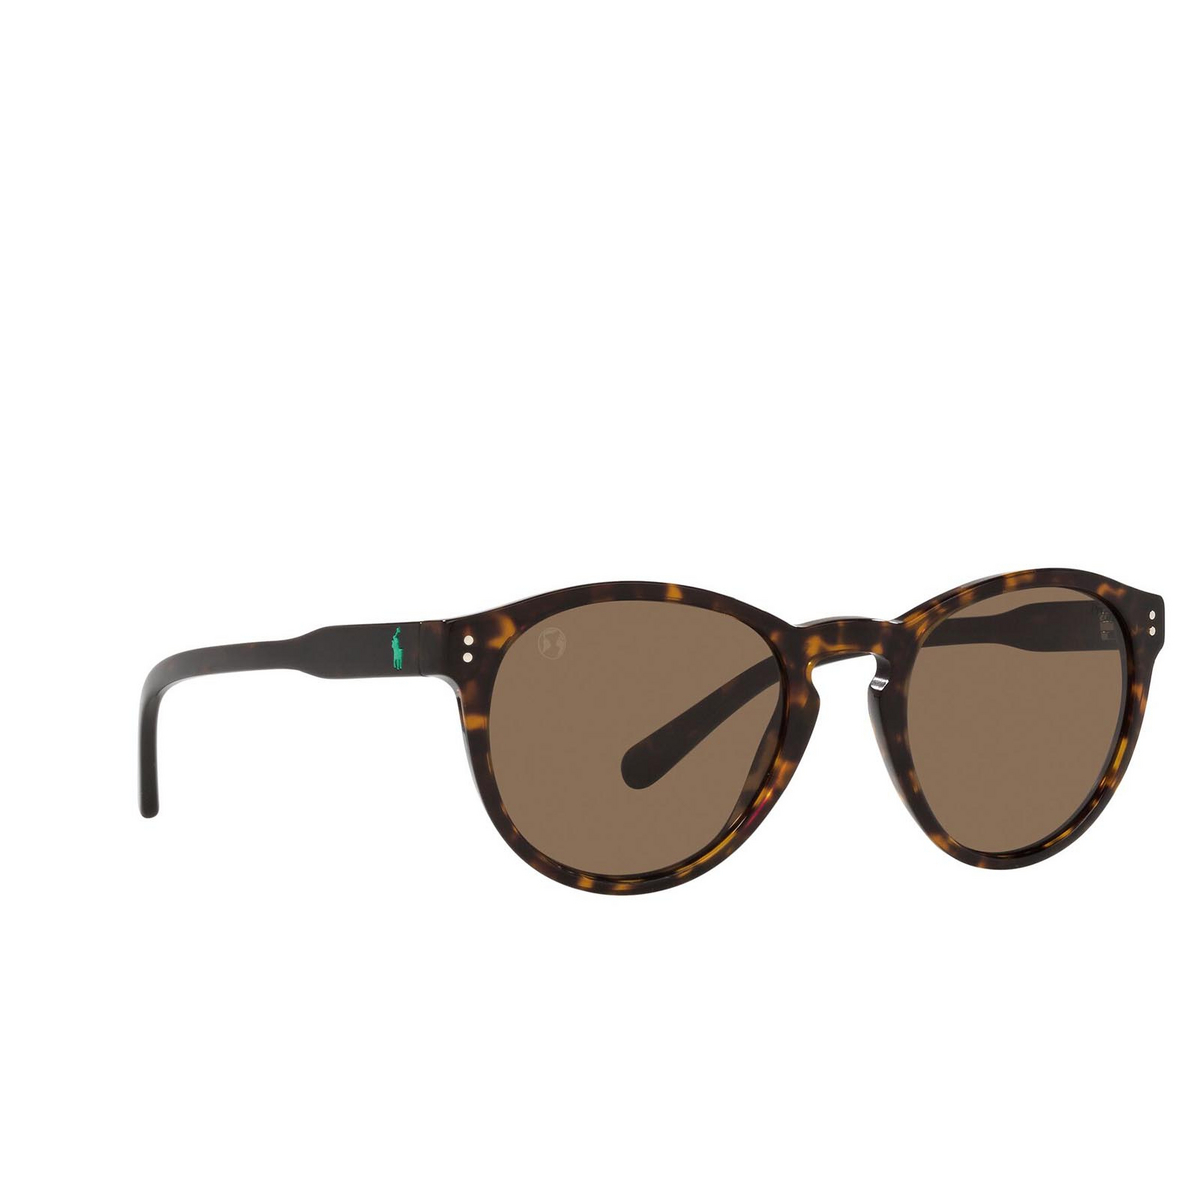 Polo Ralph Lauren® Round Sunglasses: PH4172 color Shiny Dark Havana 595473 - three-quarters view.